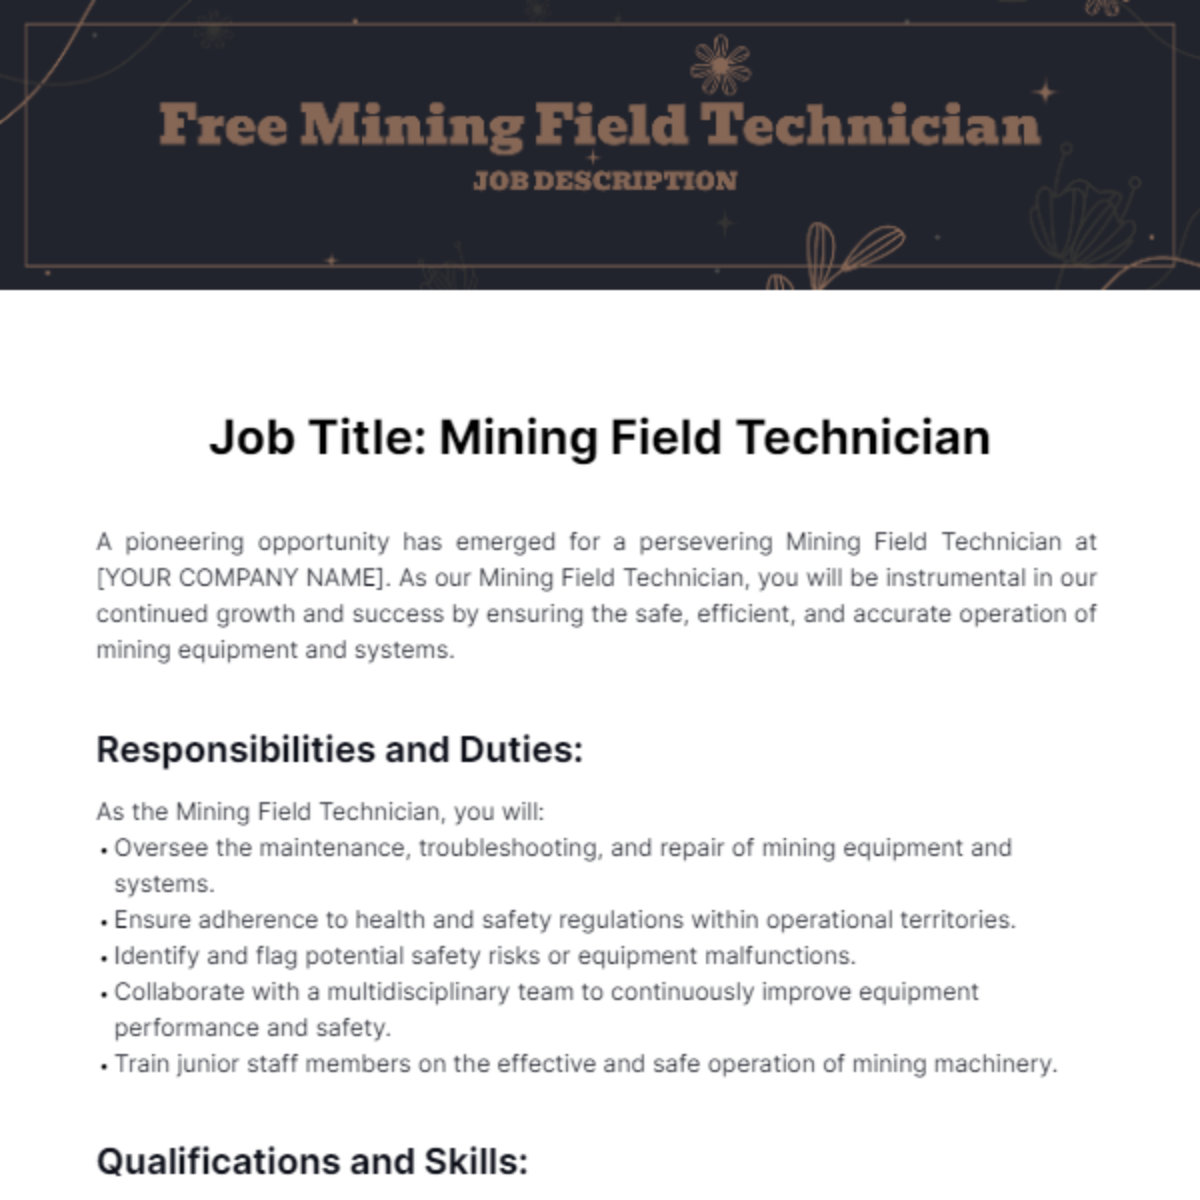 Mining Field Technician Job Description Template